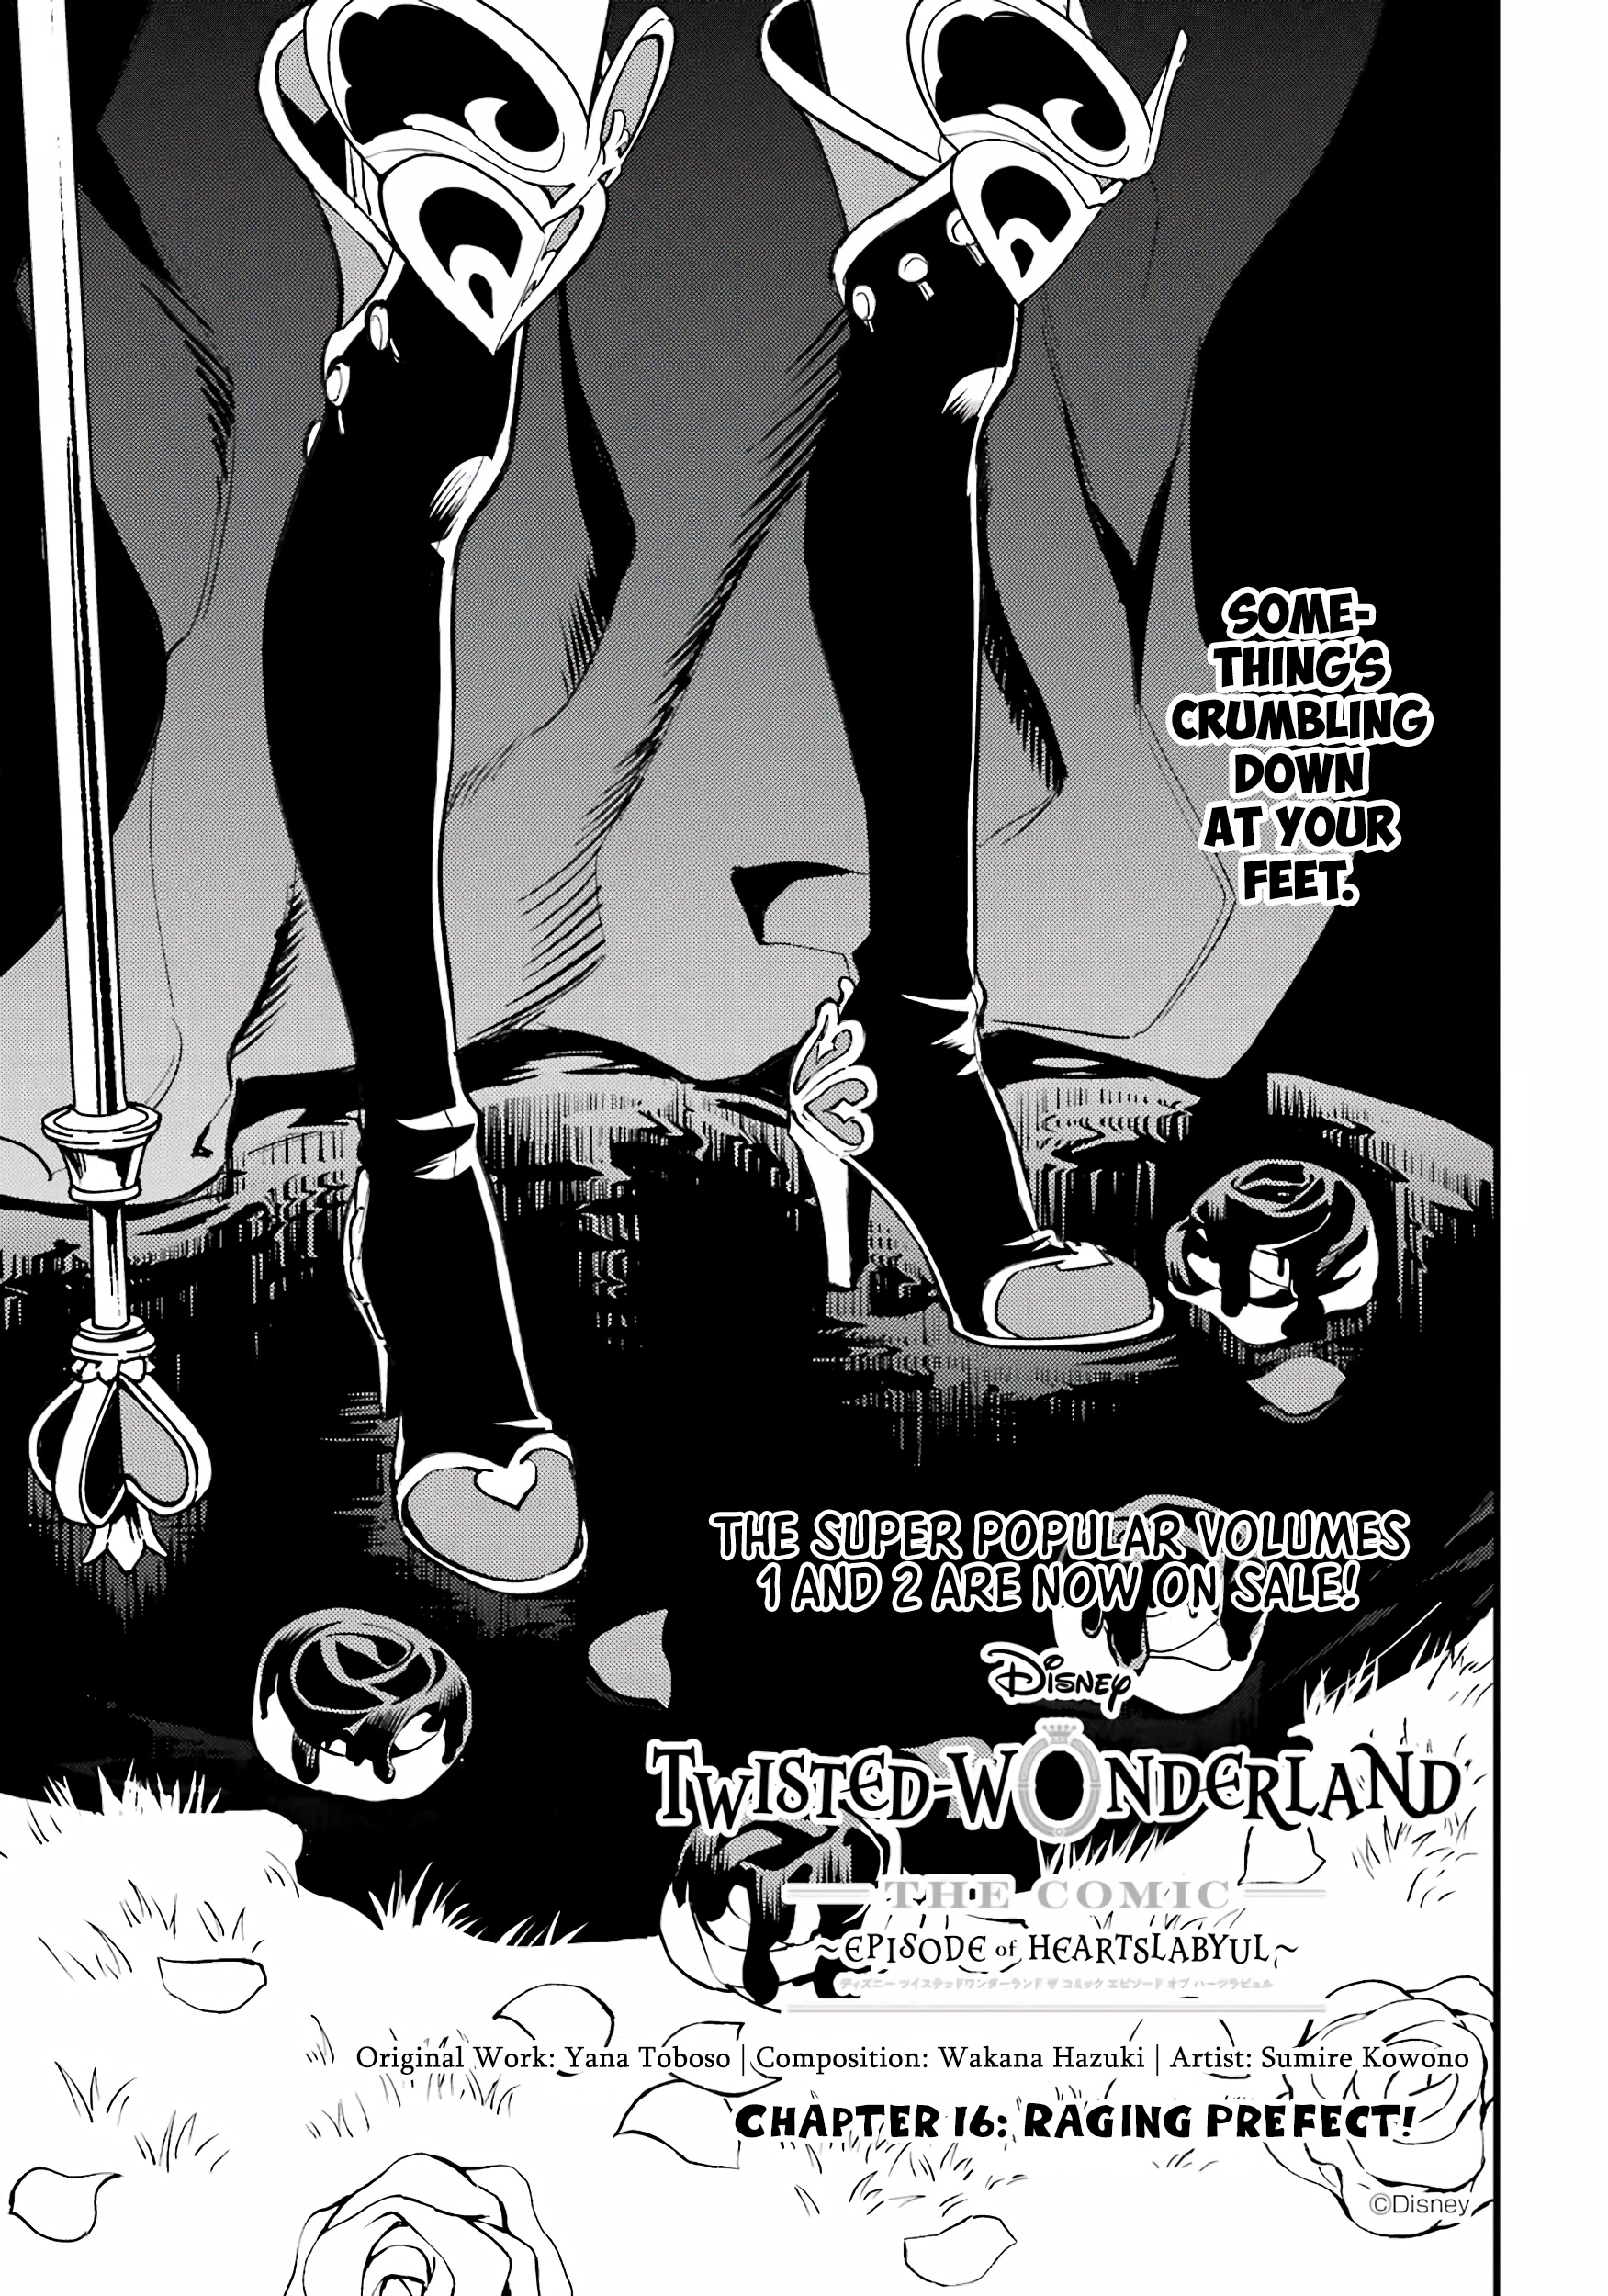 Disney Twisted Wonderland - The Comic - ~Episode Of Heartslabyul~ - Page 1